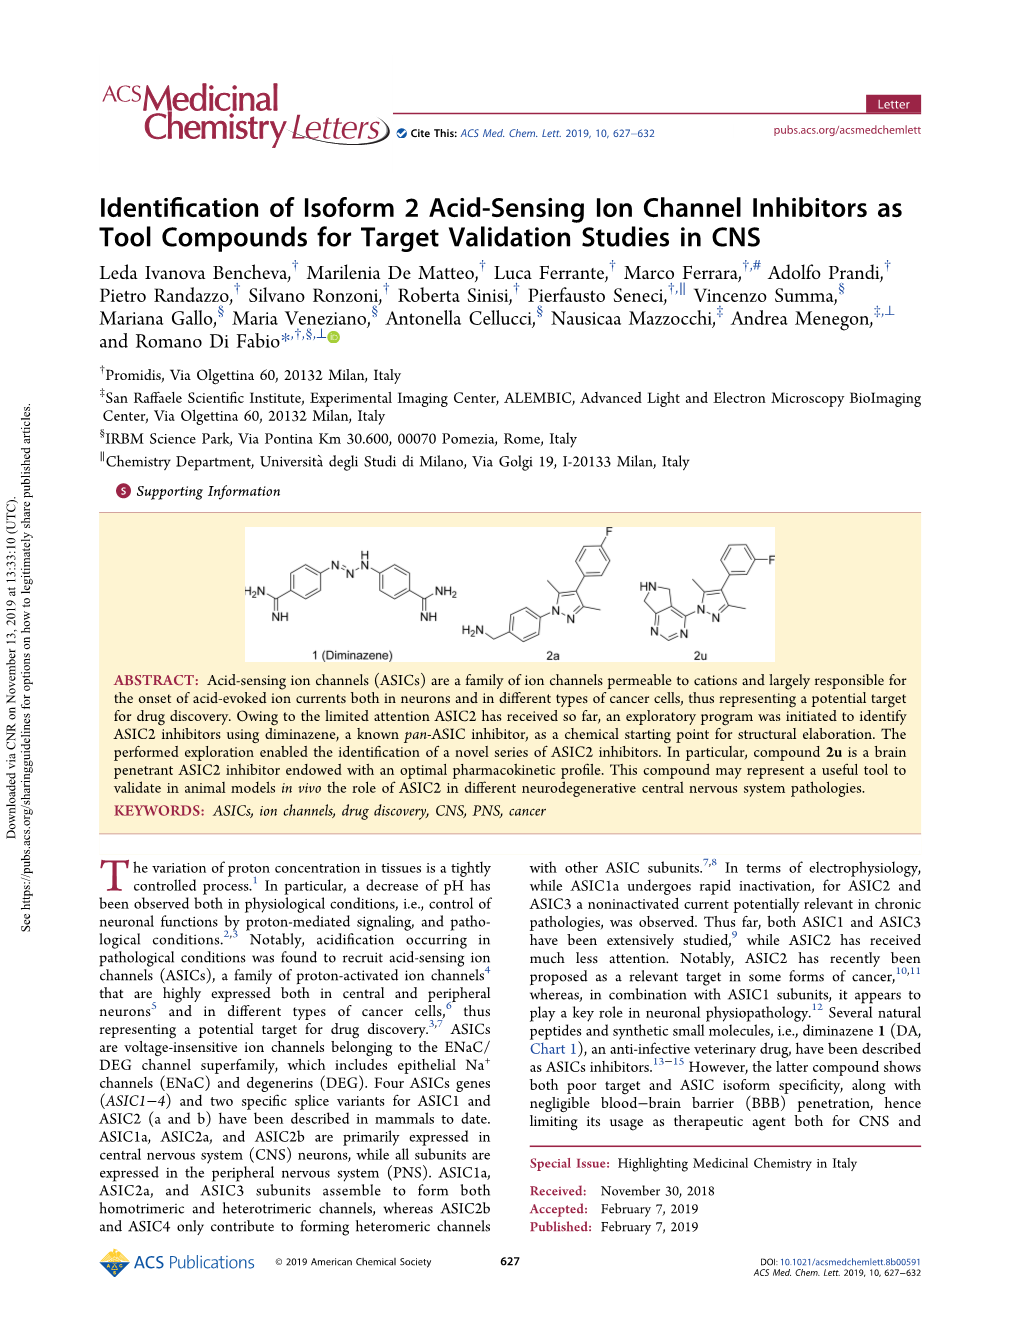 Identification of Isoform 2 Acid-Sensing Ion Channel